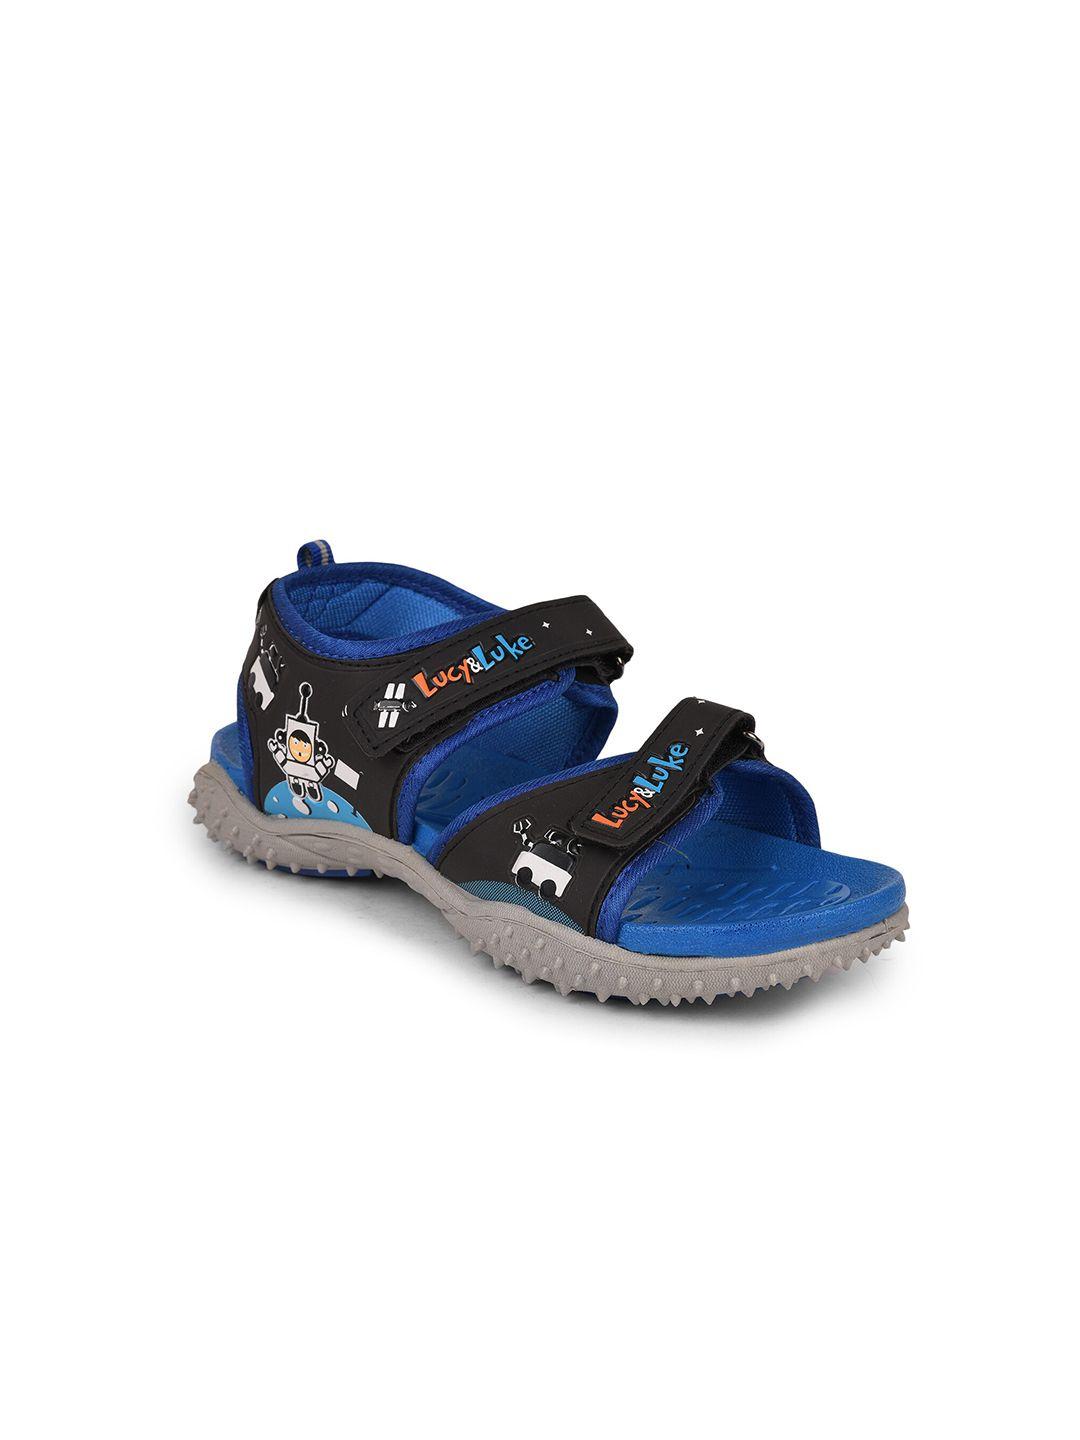 liberty-kids-blue-printed-sports-sandal